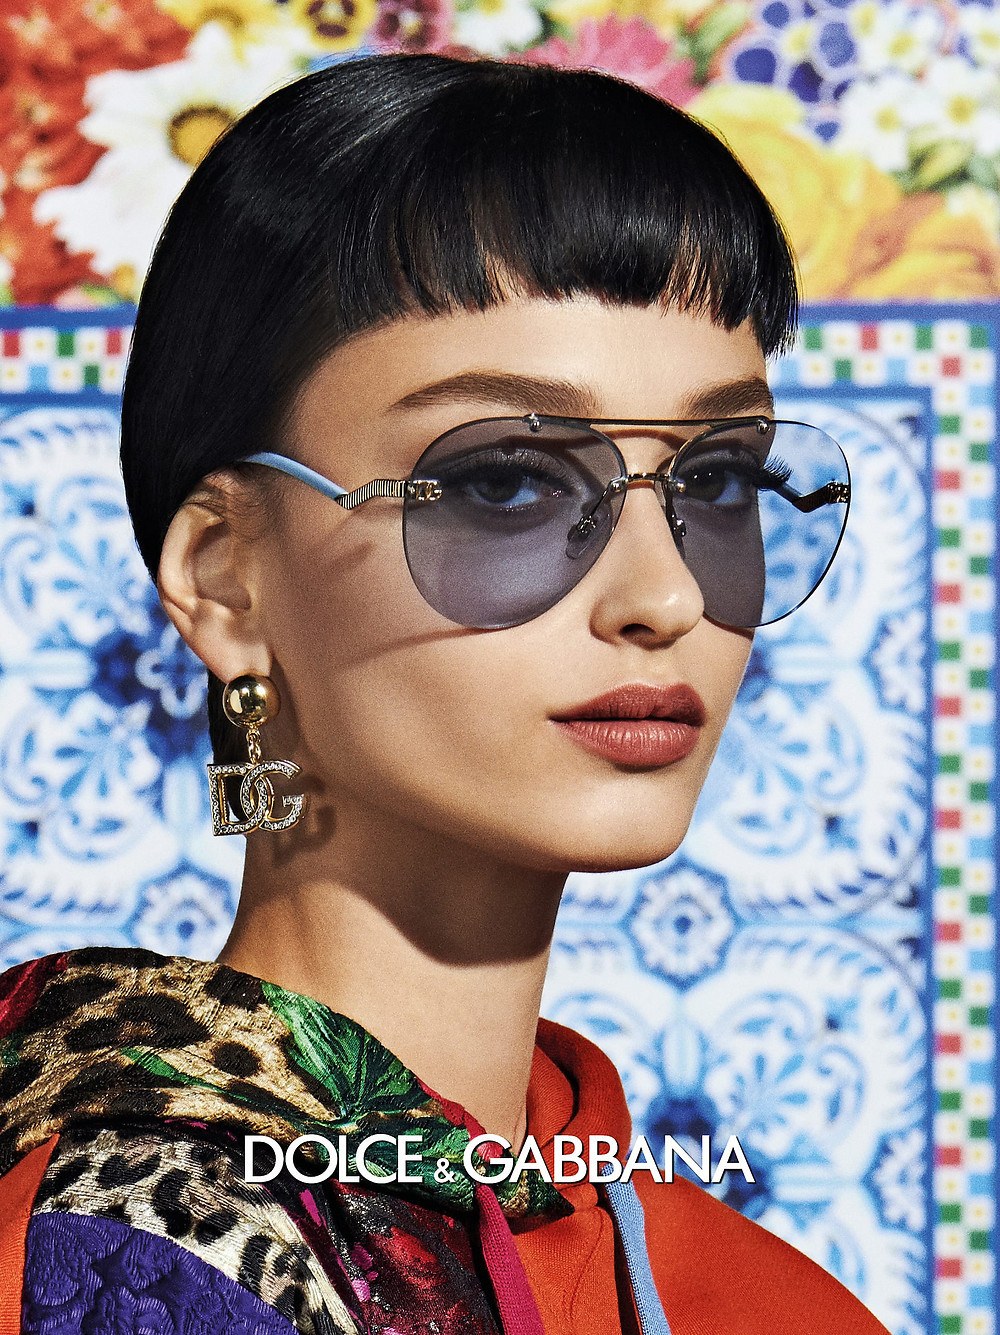 imagen 2 de A ojos de Dolce & Gabbana.